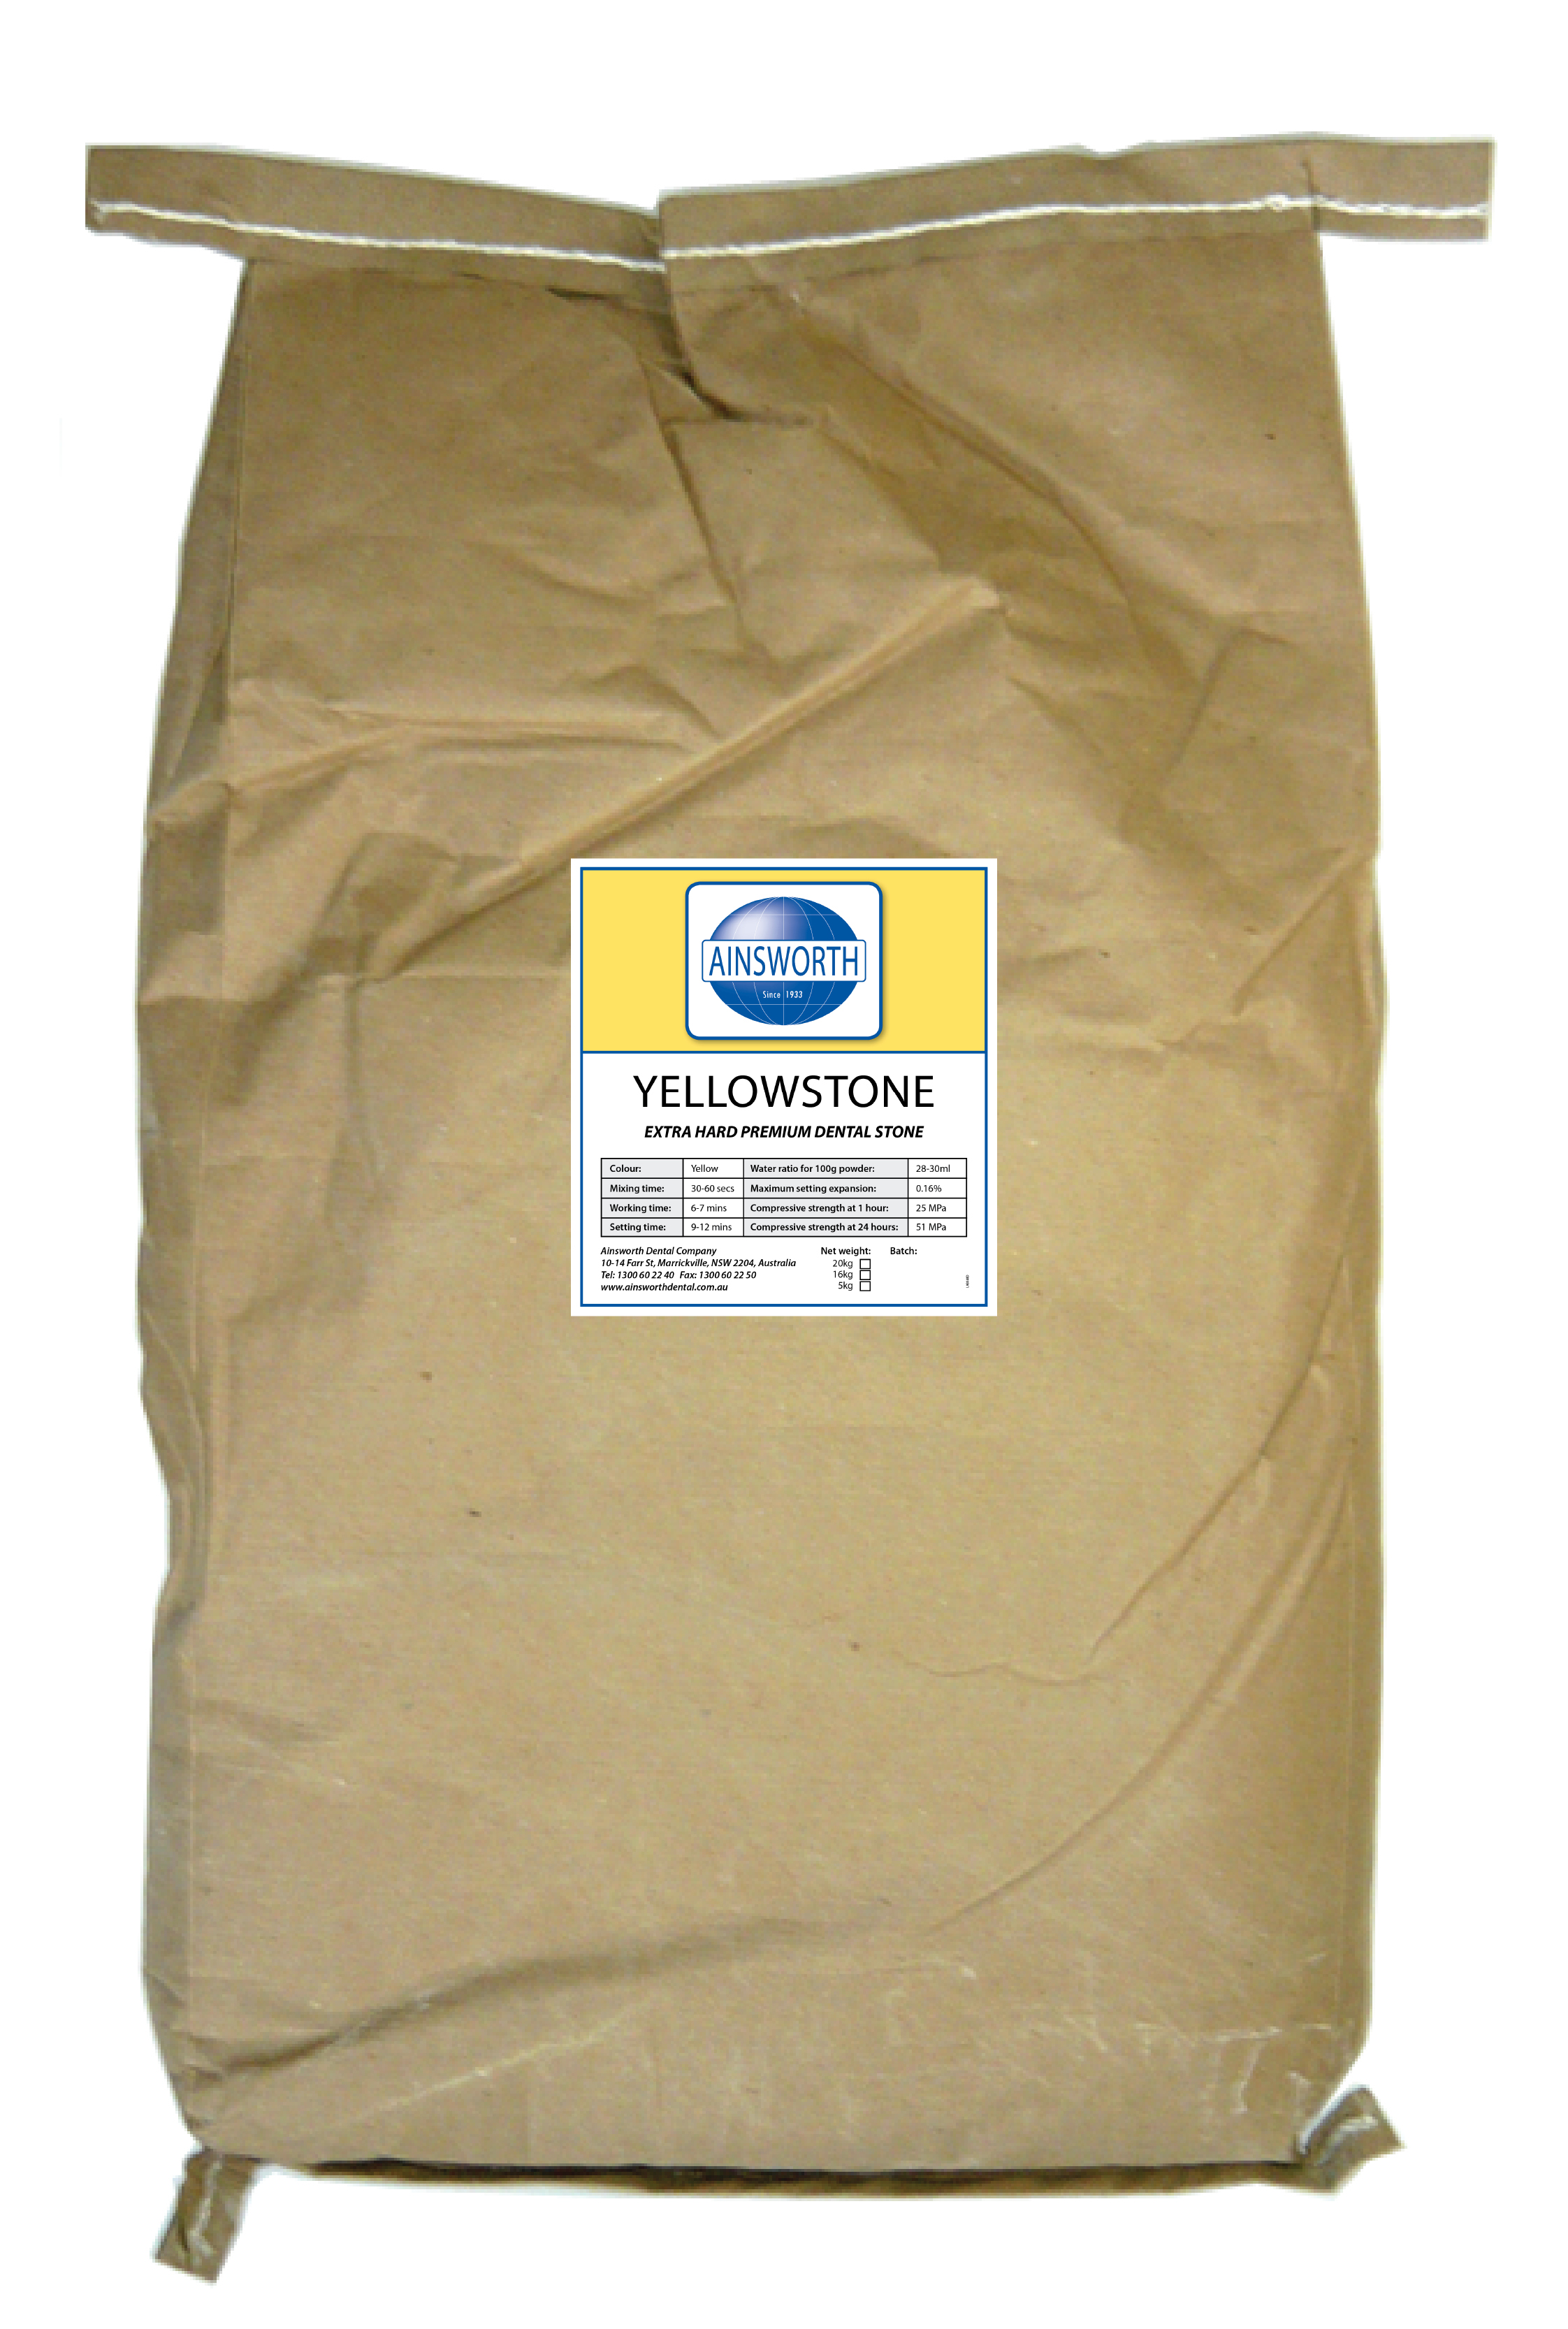 Ainsworth Yellowstone 20Kg Bag